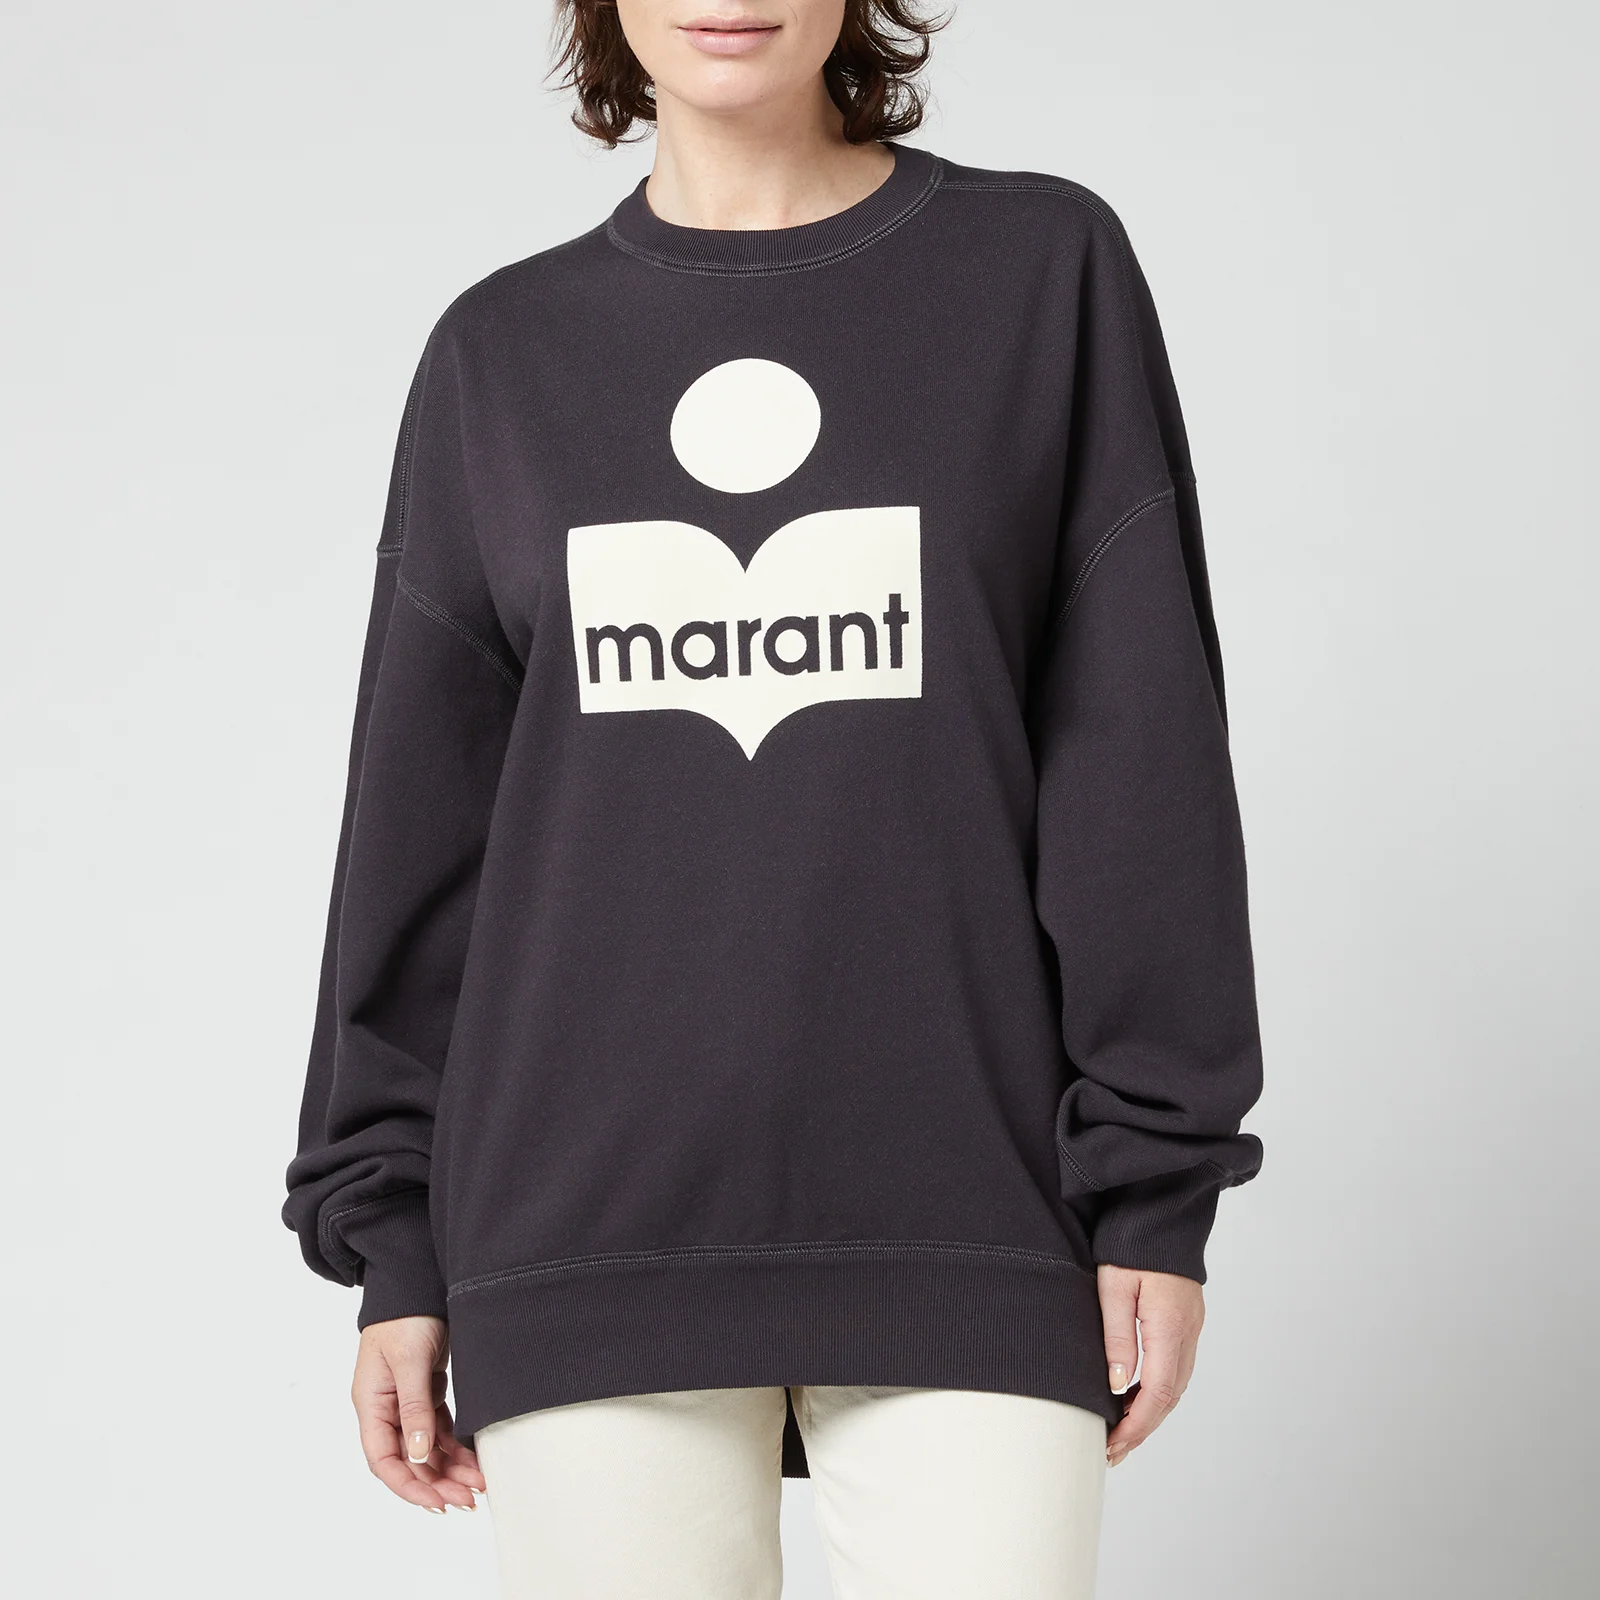 Marant Étoile Women's Mindy Sweatshirt - Faded Black Image 1